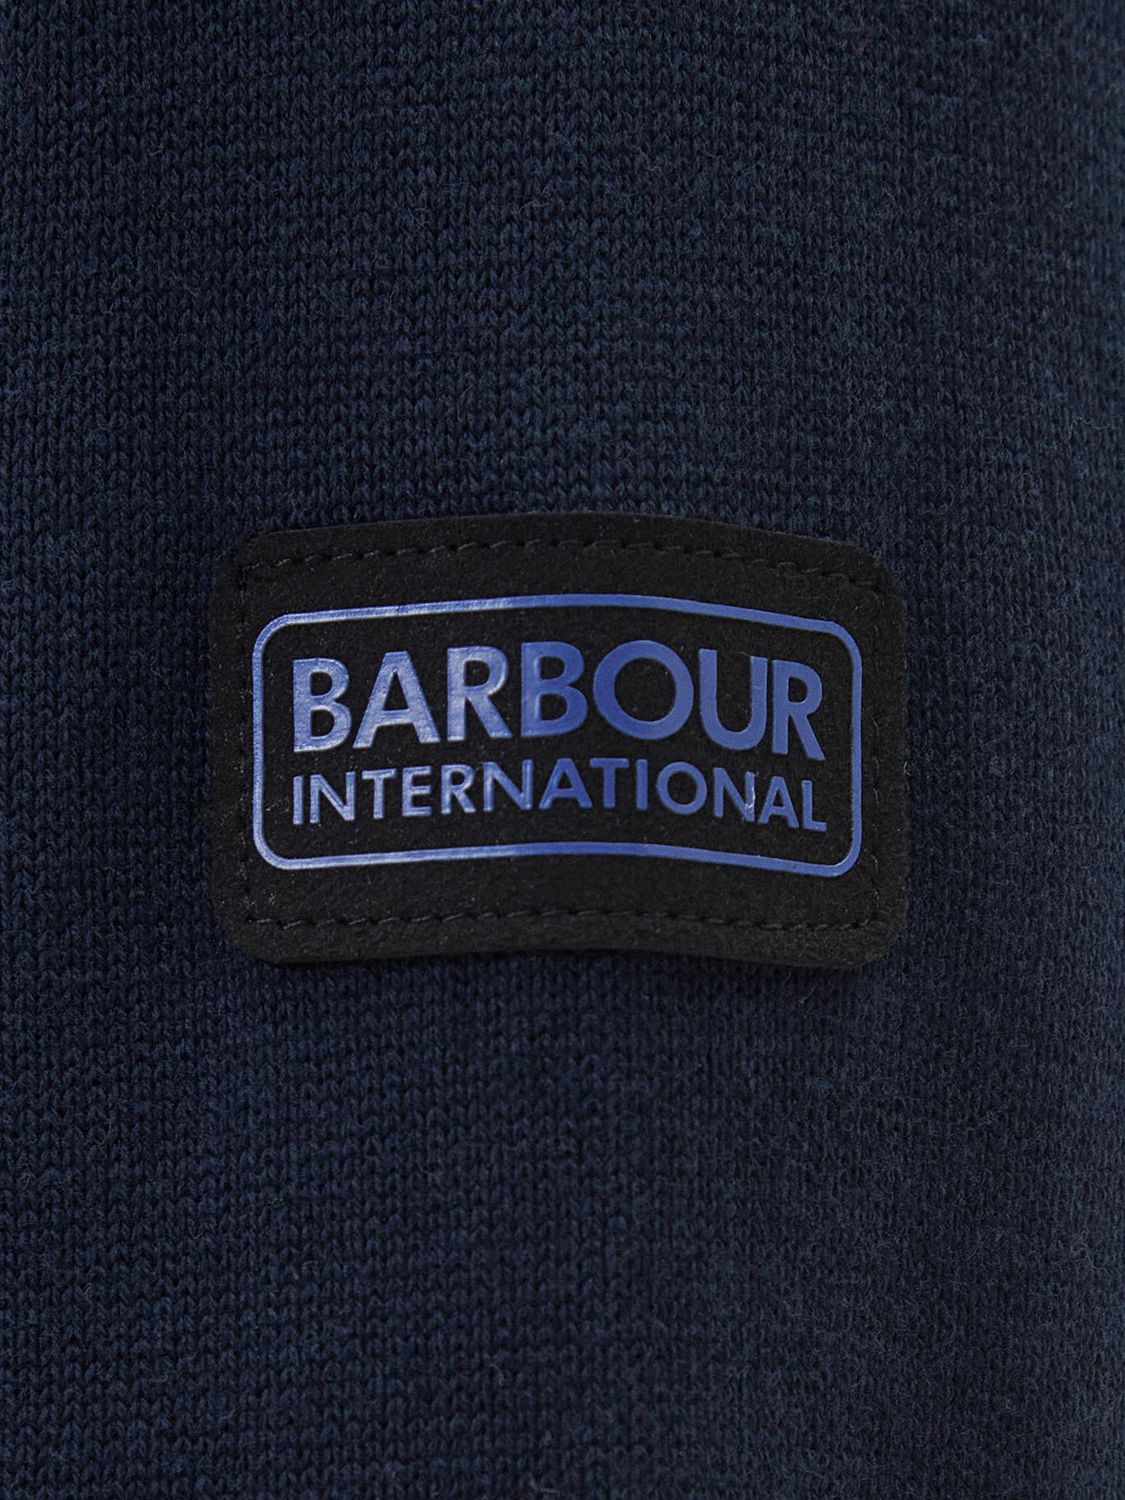 Barbour International Cotton Crew Neck Knit Jumper, Black, S